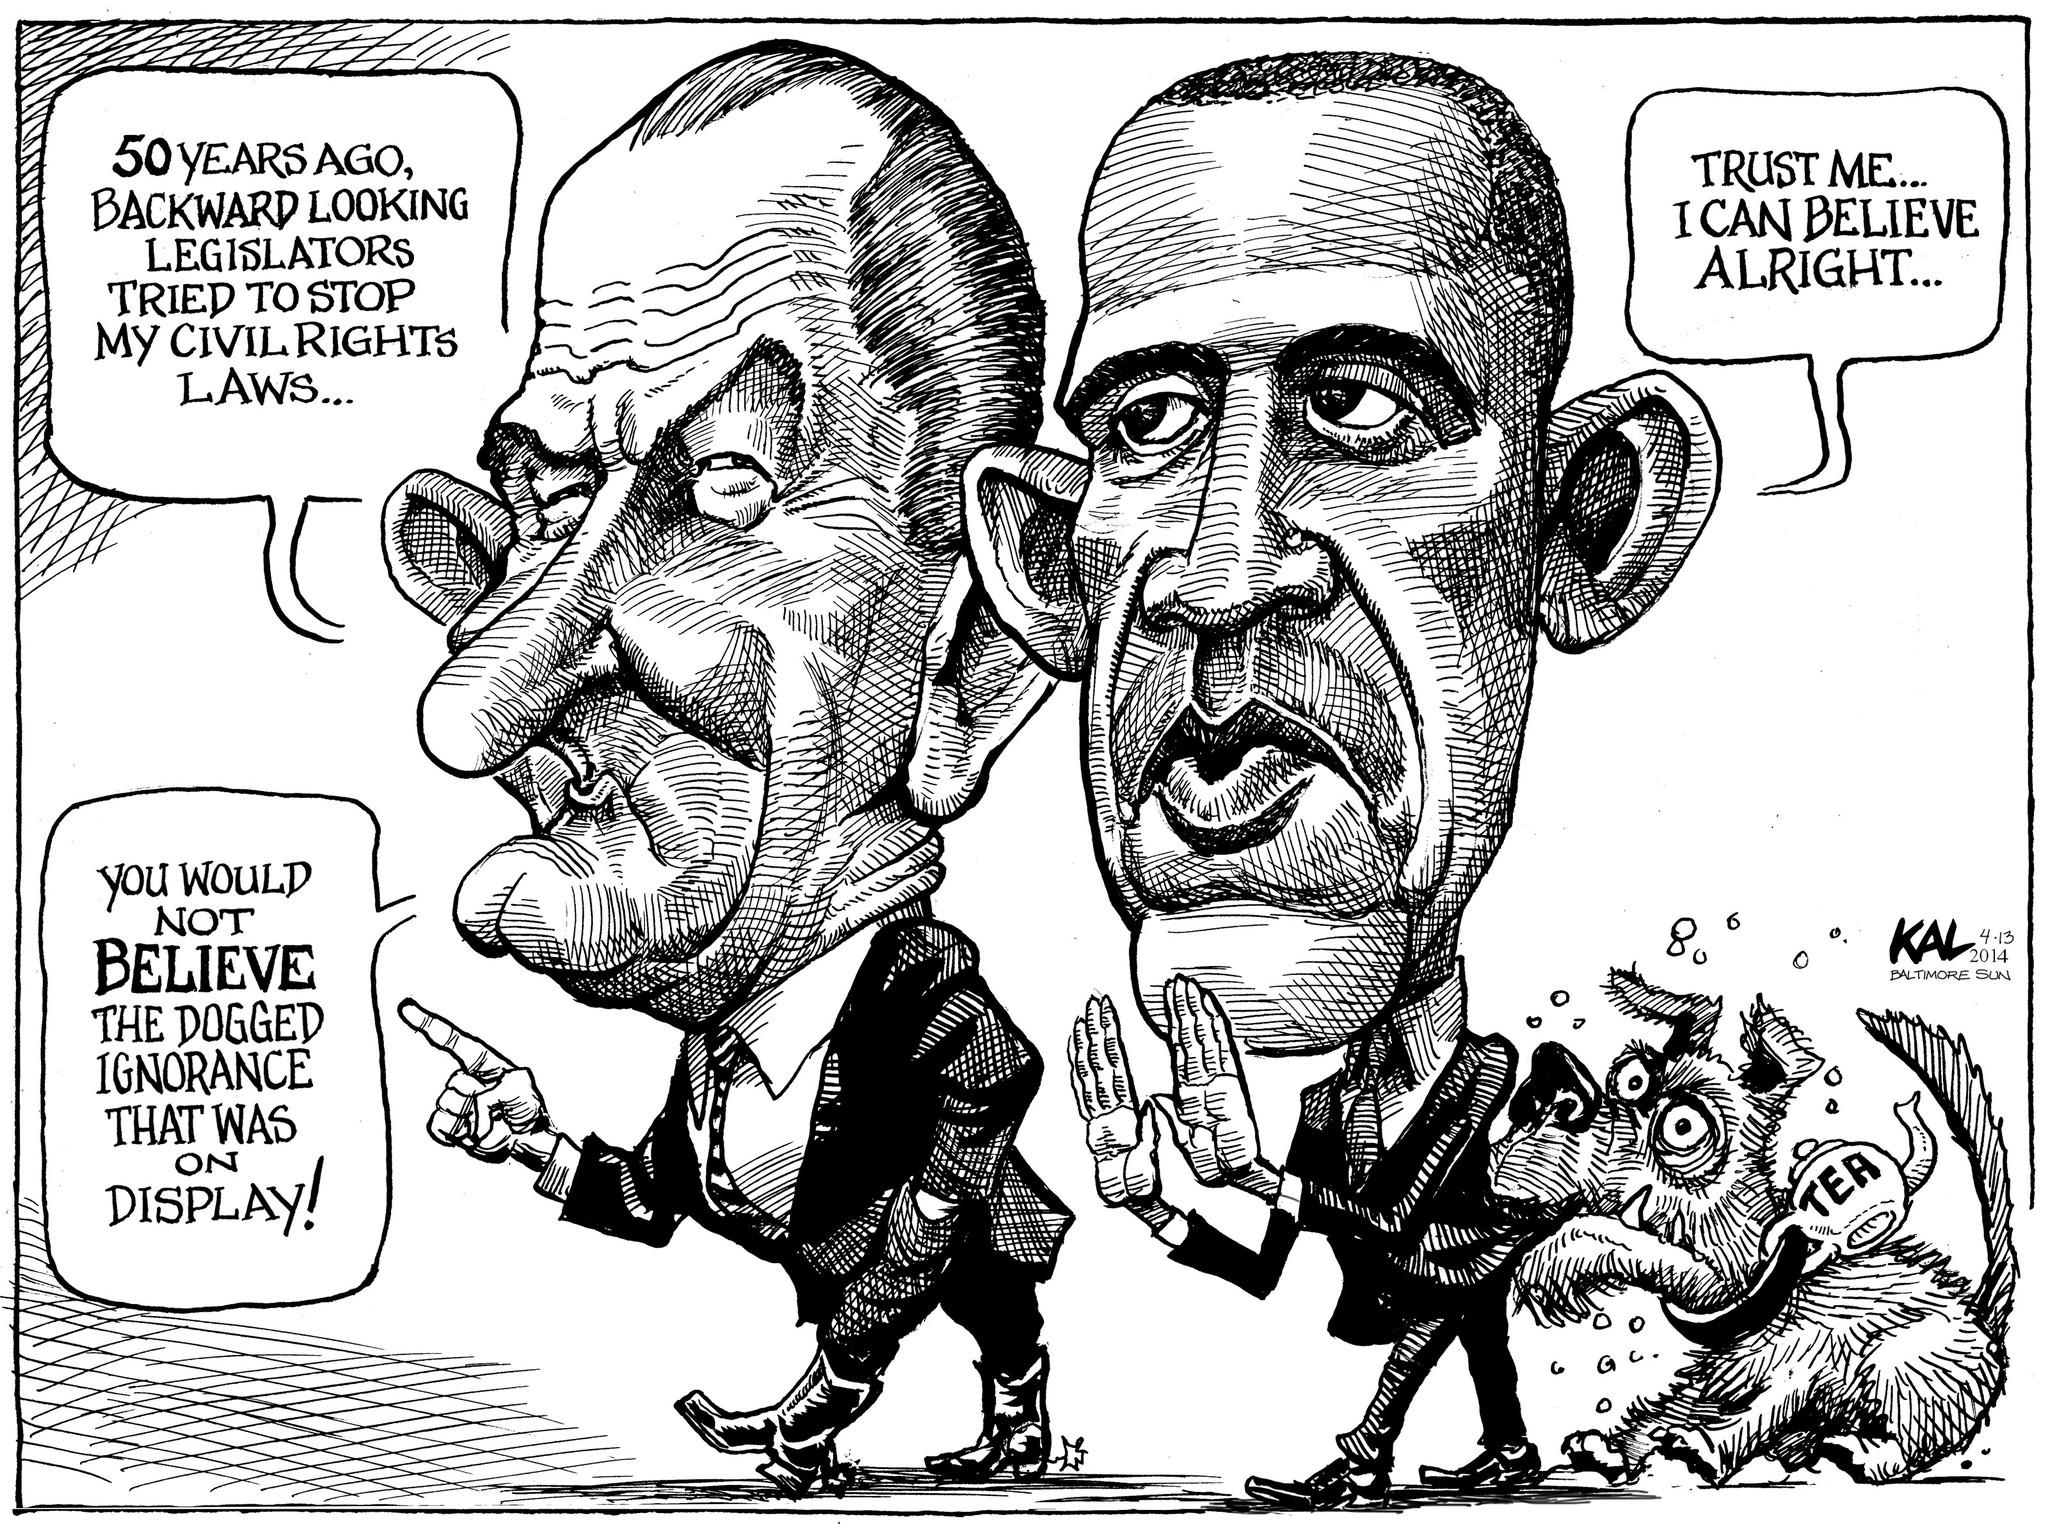 KAL cartoon reflects on LBJ's legacy in age of Obama - tribunedigital